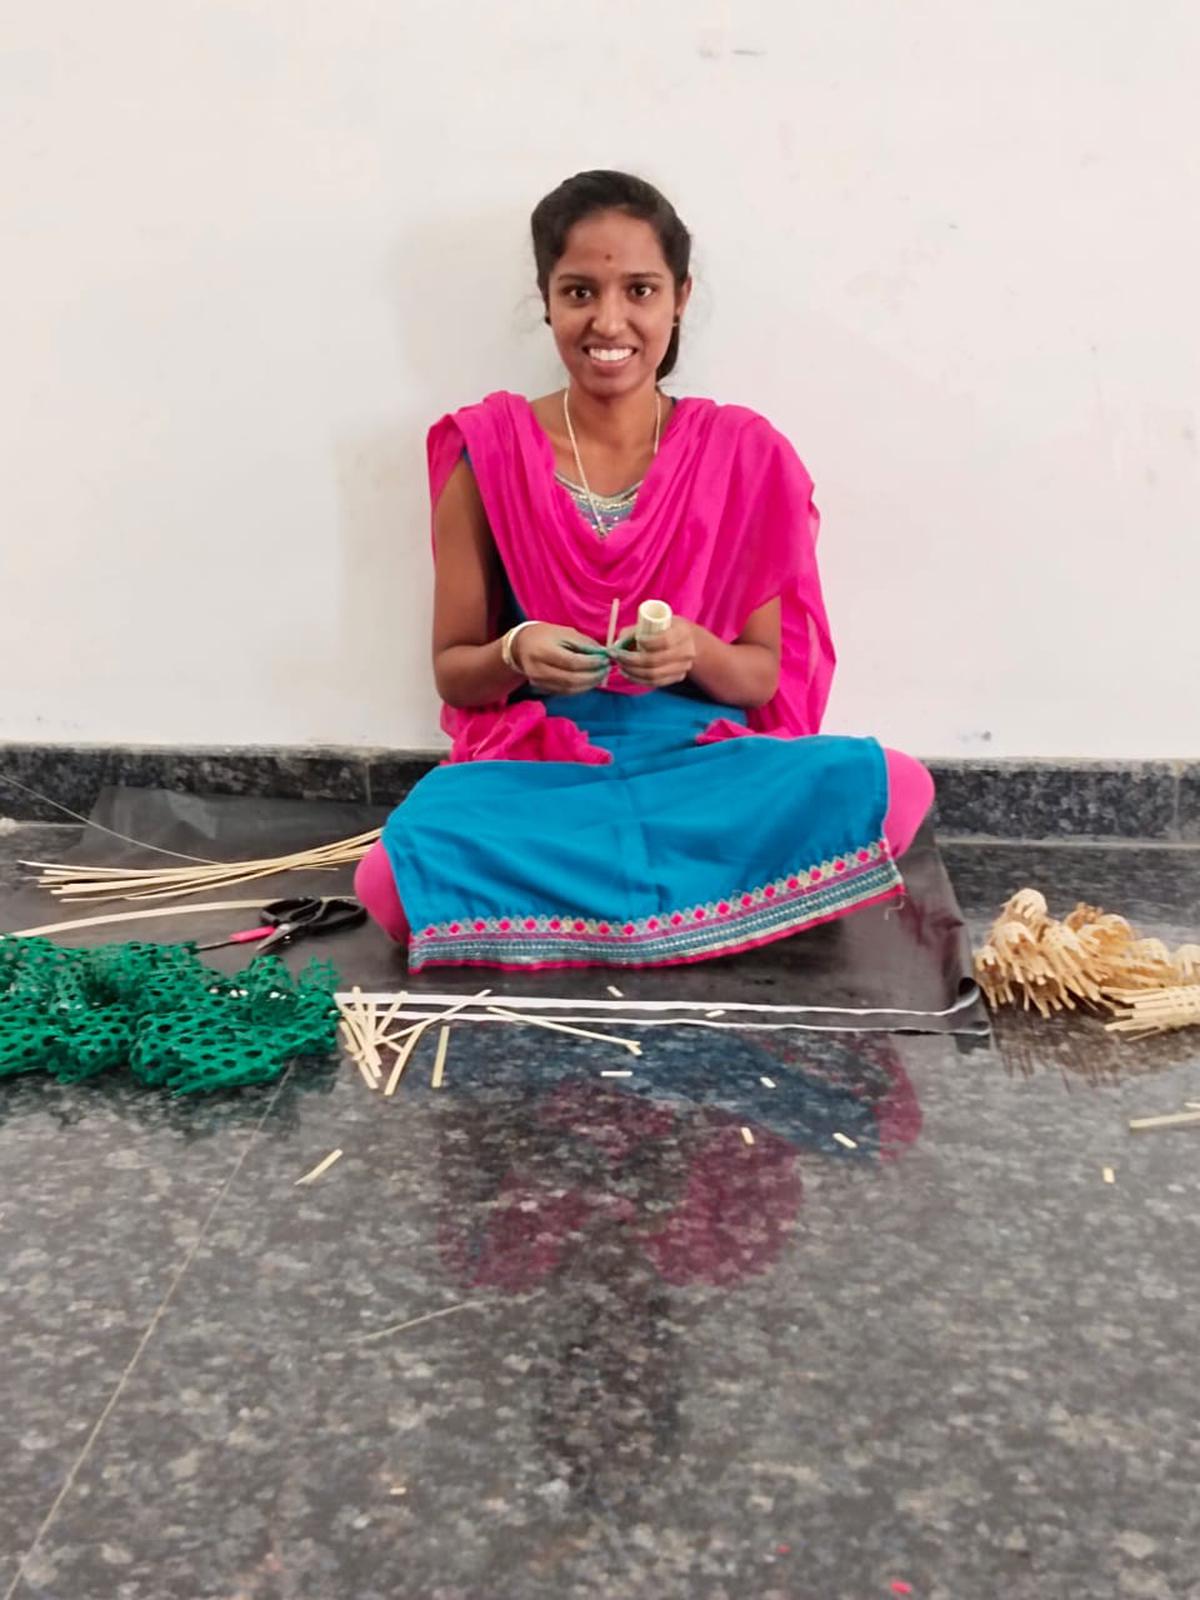 Shanti S is a member of Karnataka-based Mahila Swasahaya Mutual Benefit Trust, a women’s collective making bamboo products.